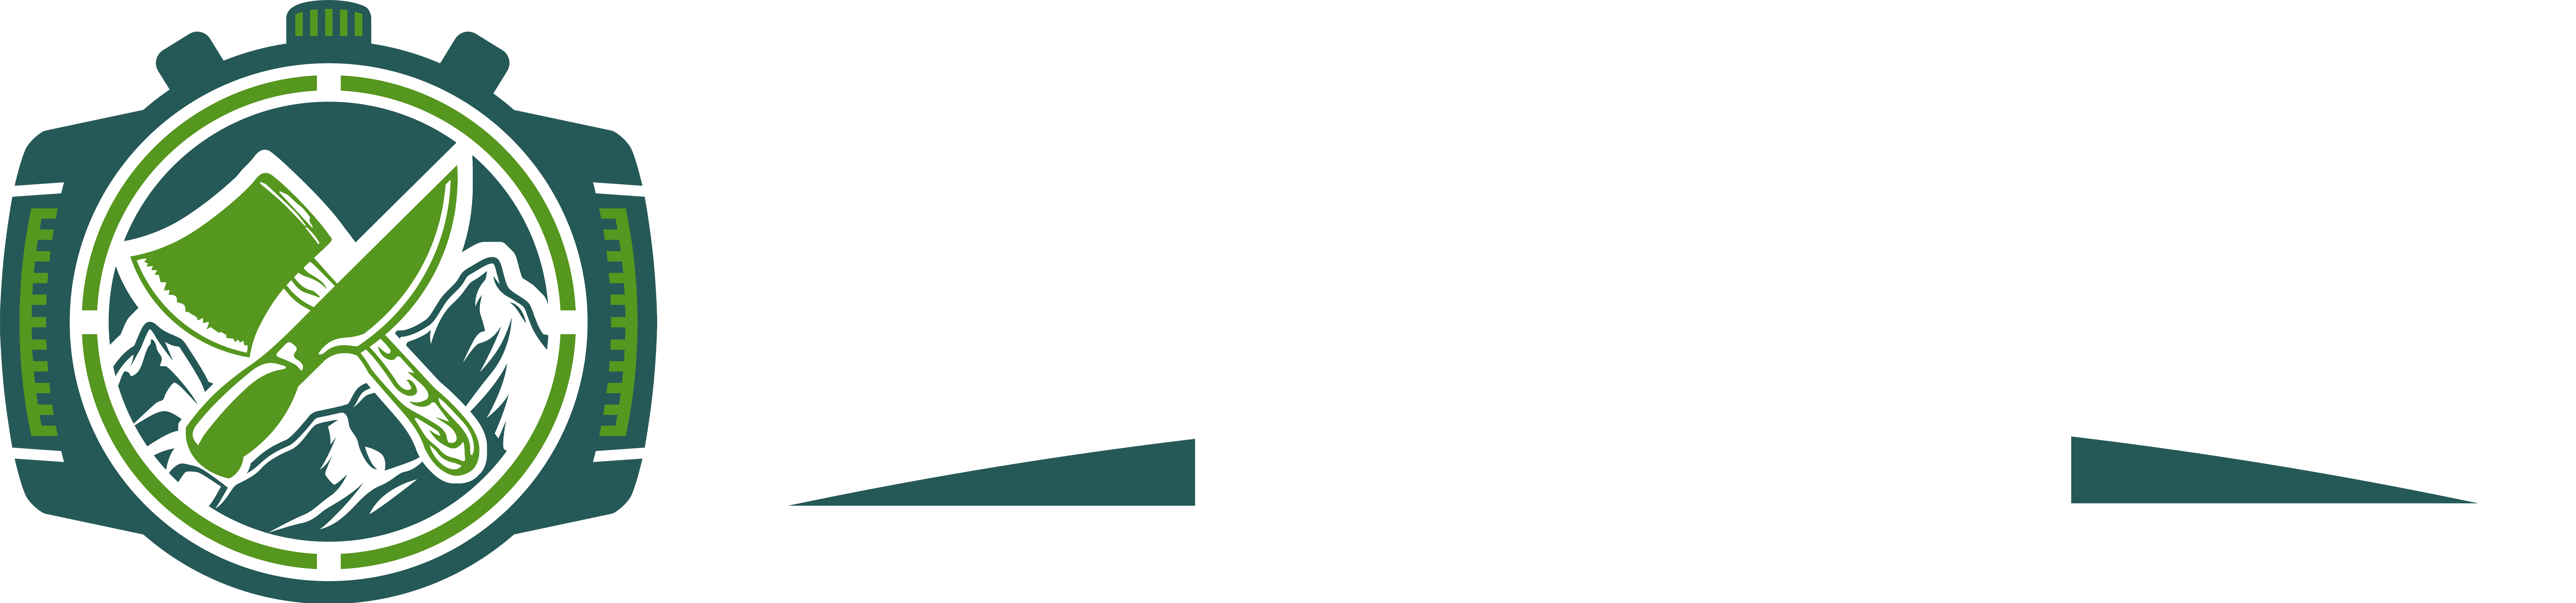 Survival Gear Outpost